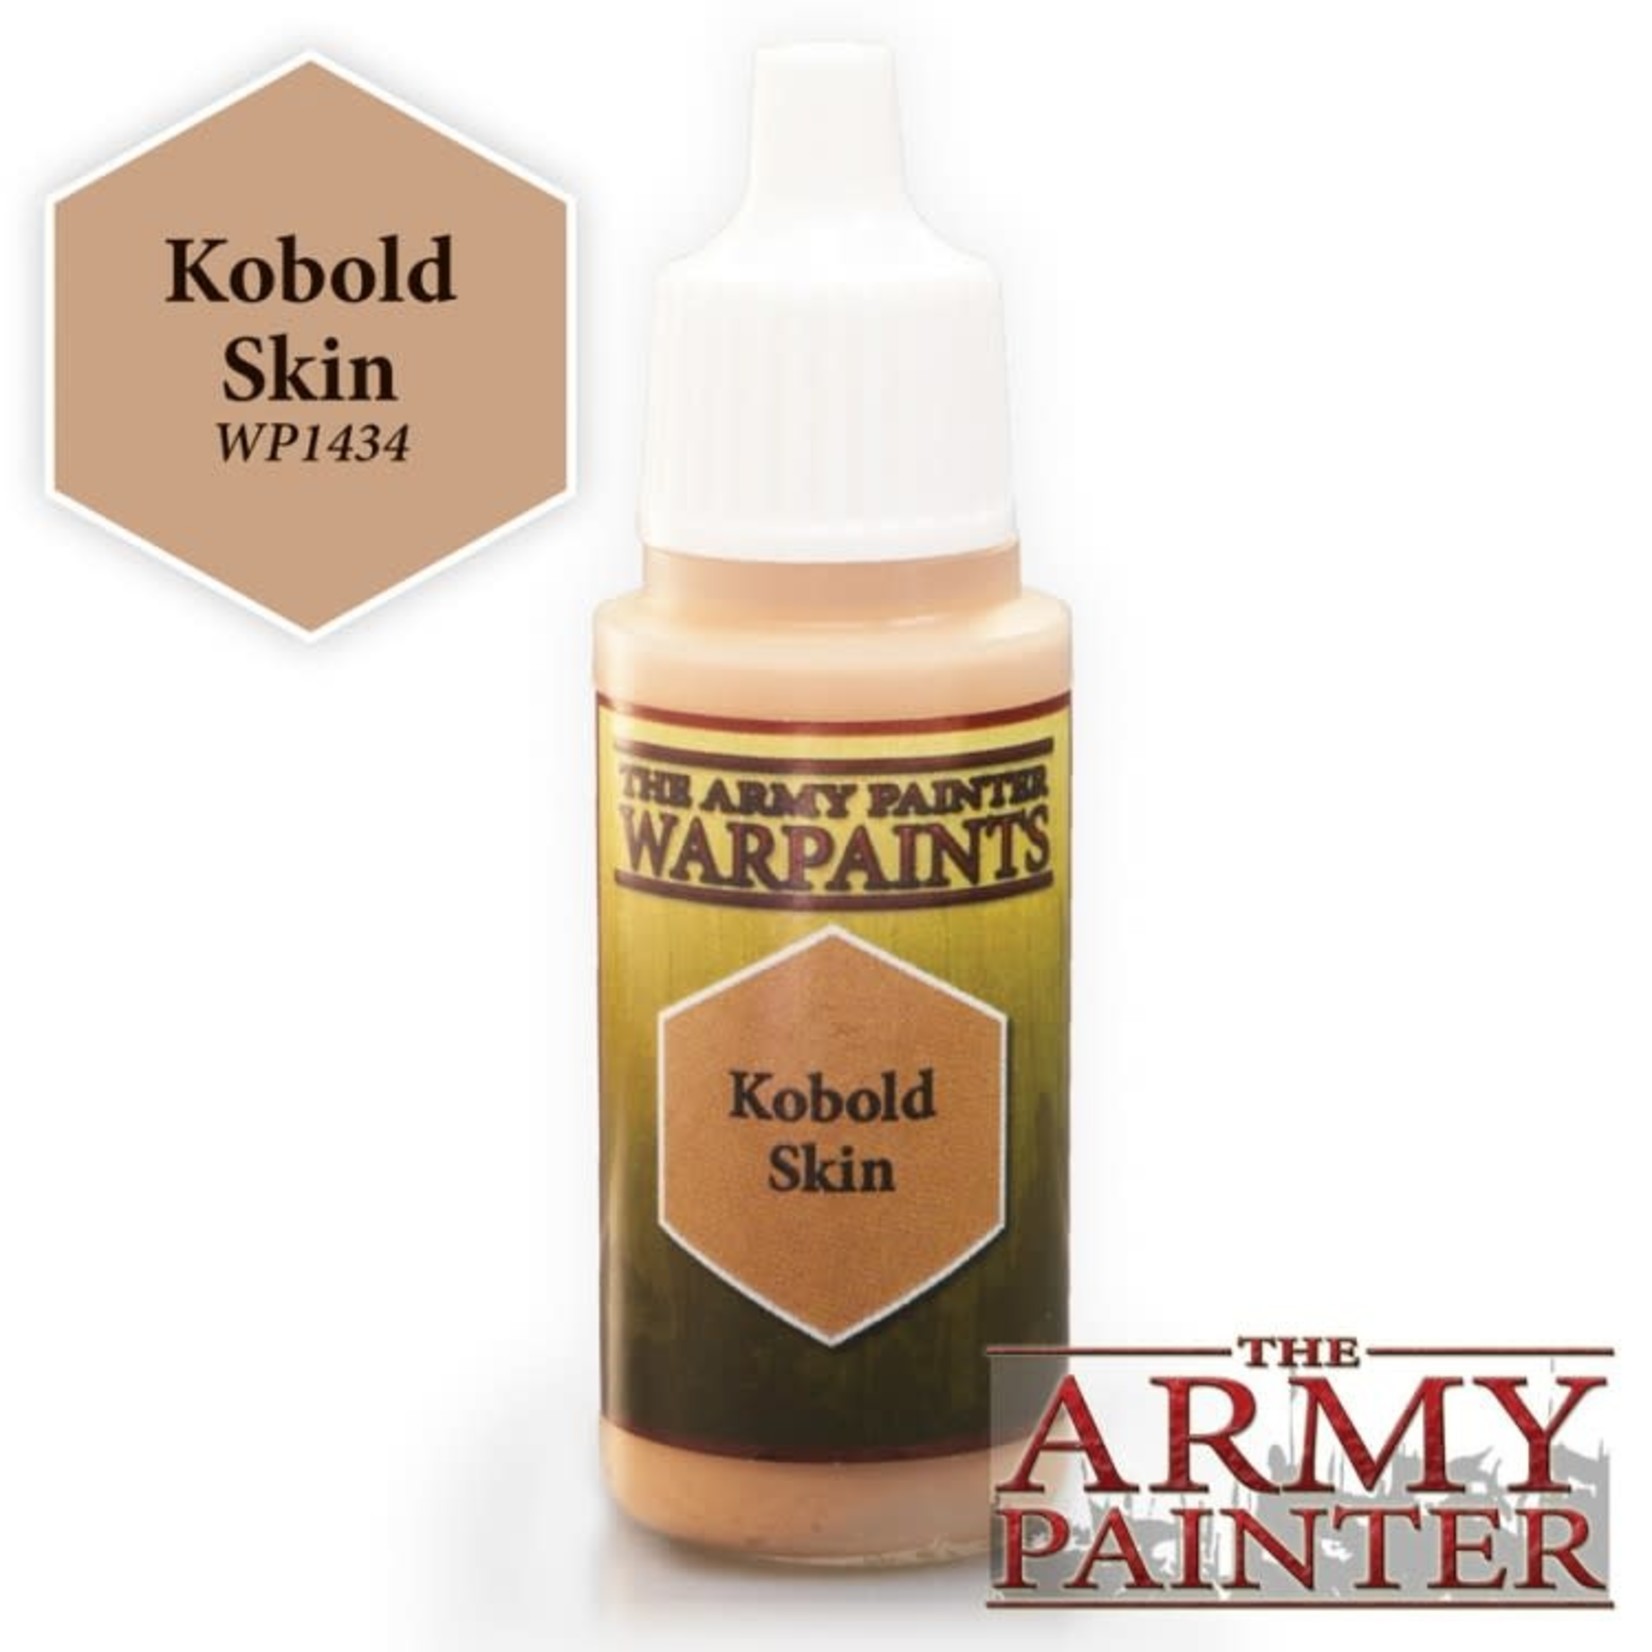 Army Painter Army Painter Warpaints Kobold Skin